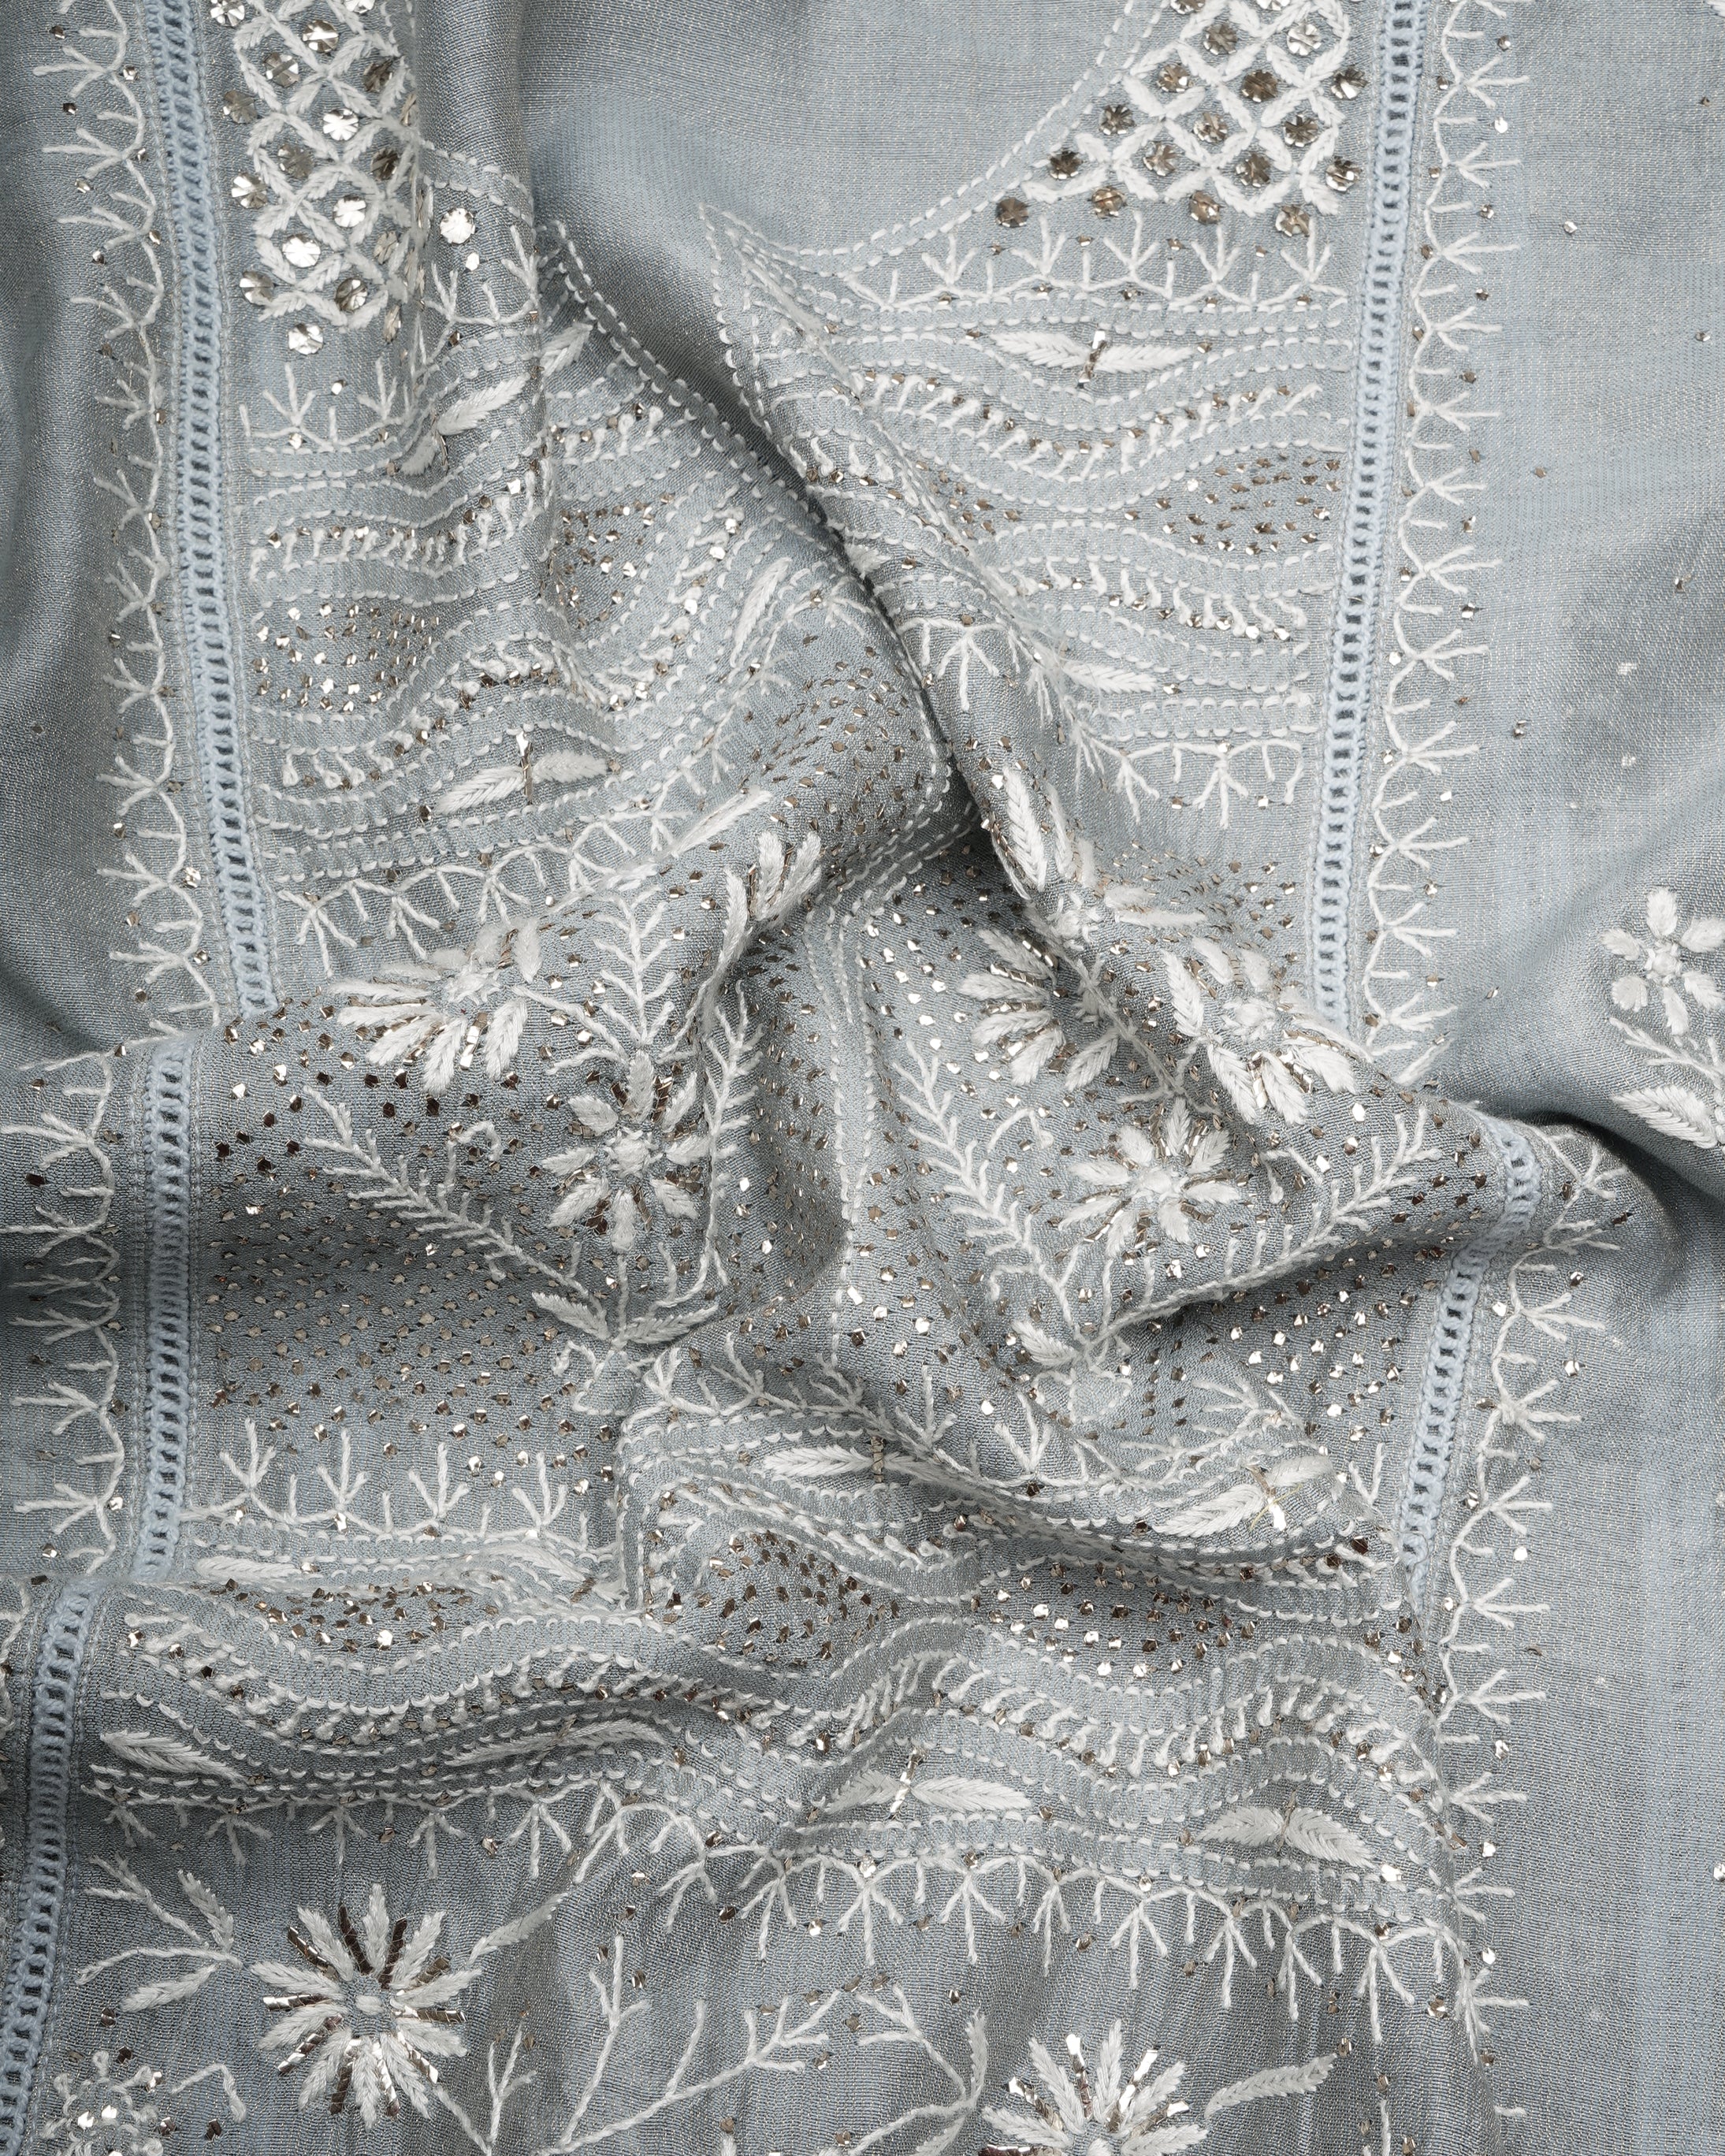 Icy Morn Handcrafted Mukaish Work Chikankari Embroidered Tissue Chanderi Unstitched Suit Set (Top & Dupatta)